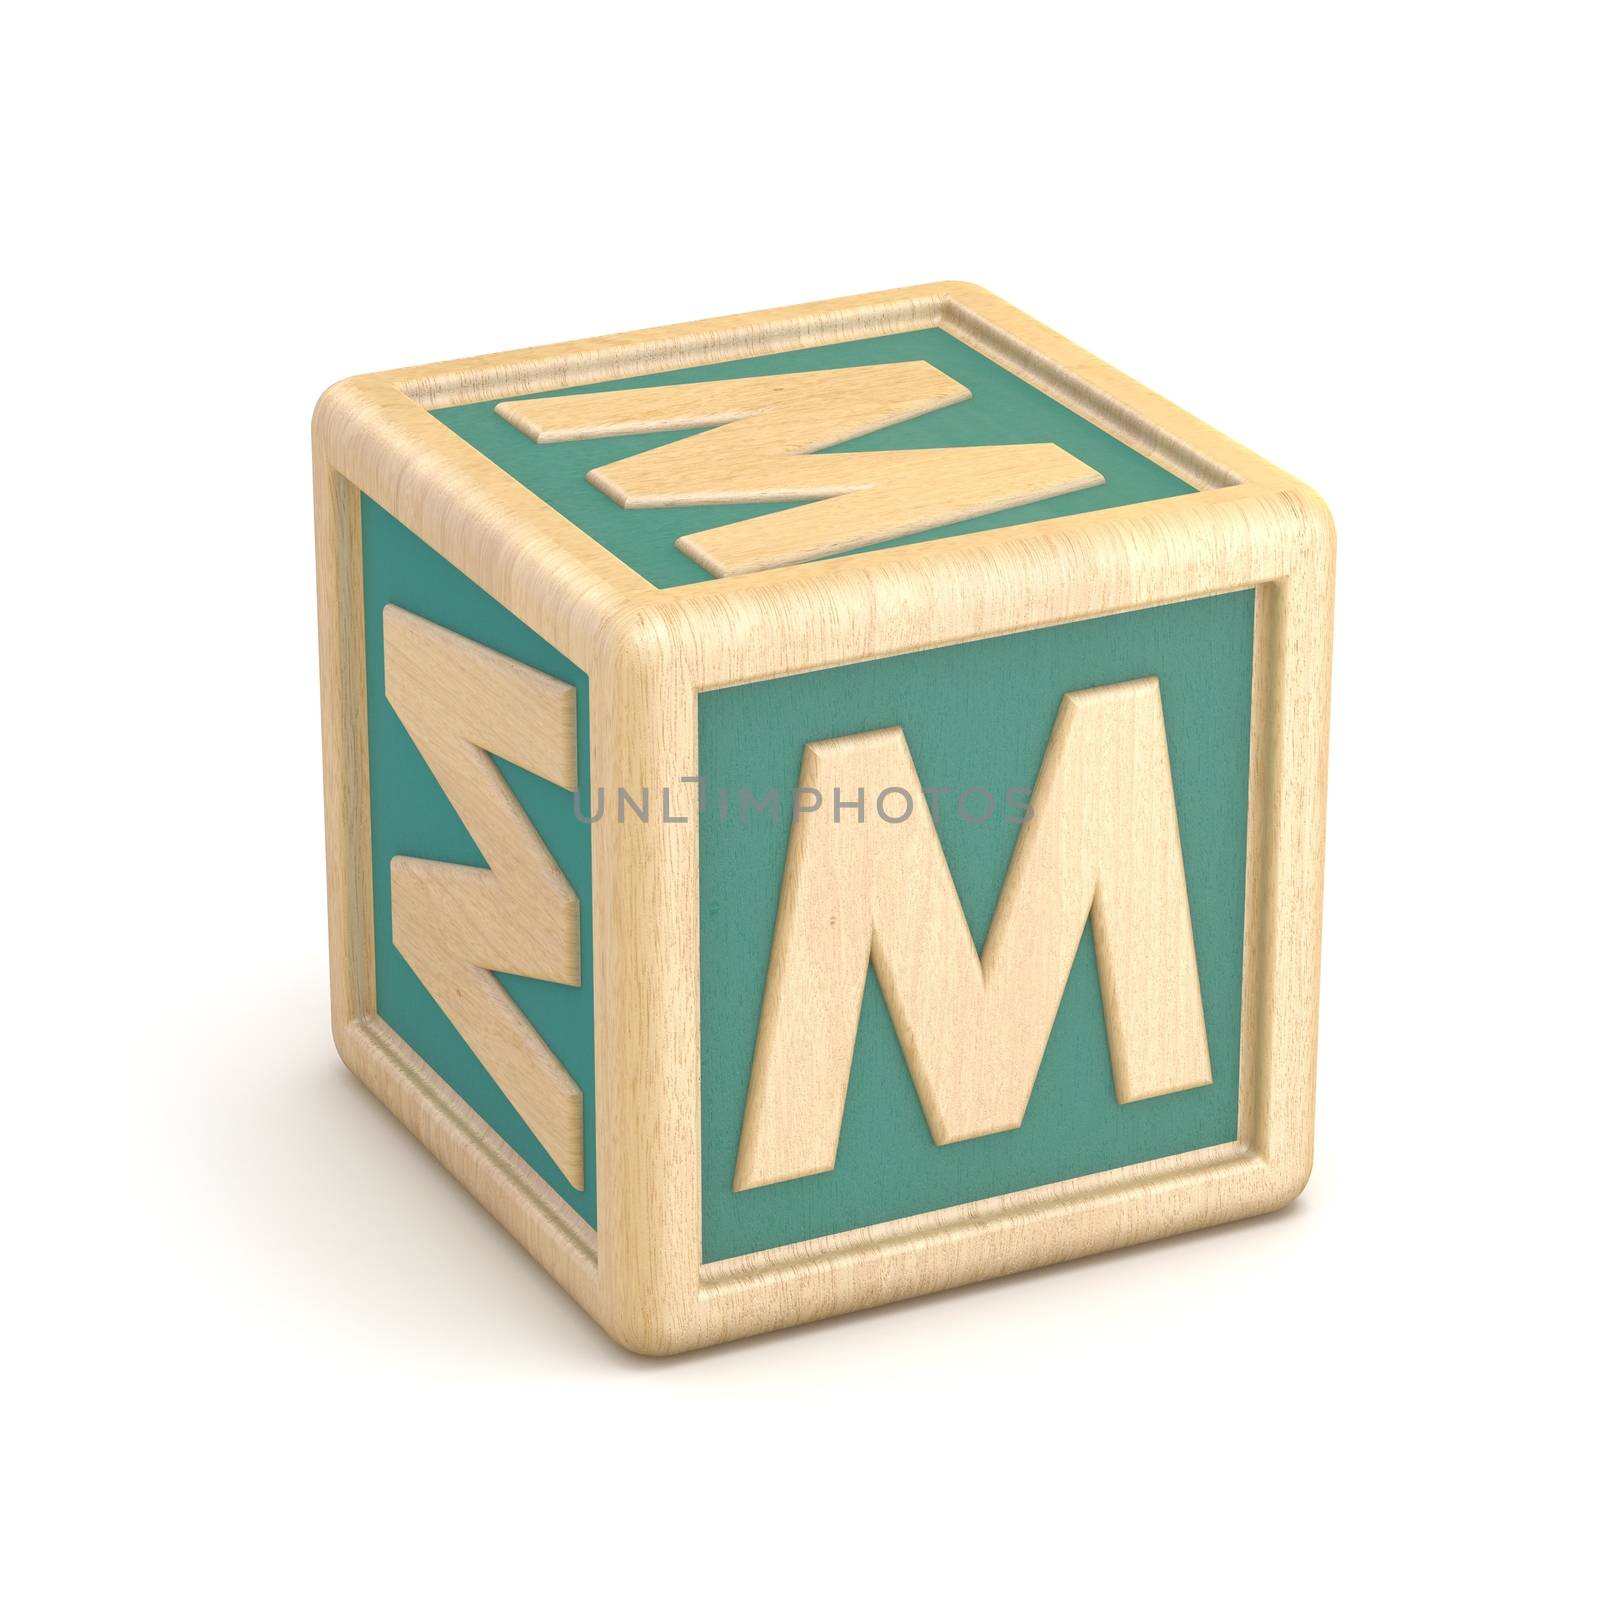 Letter M wooden alphabet blocks font rotated. 3D render illustration isolated on white background